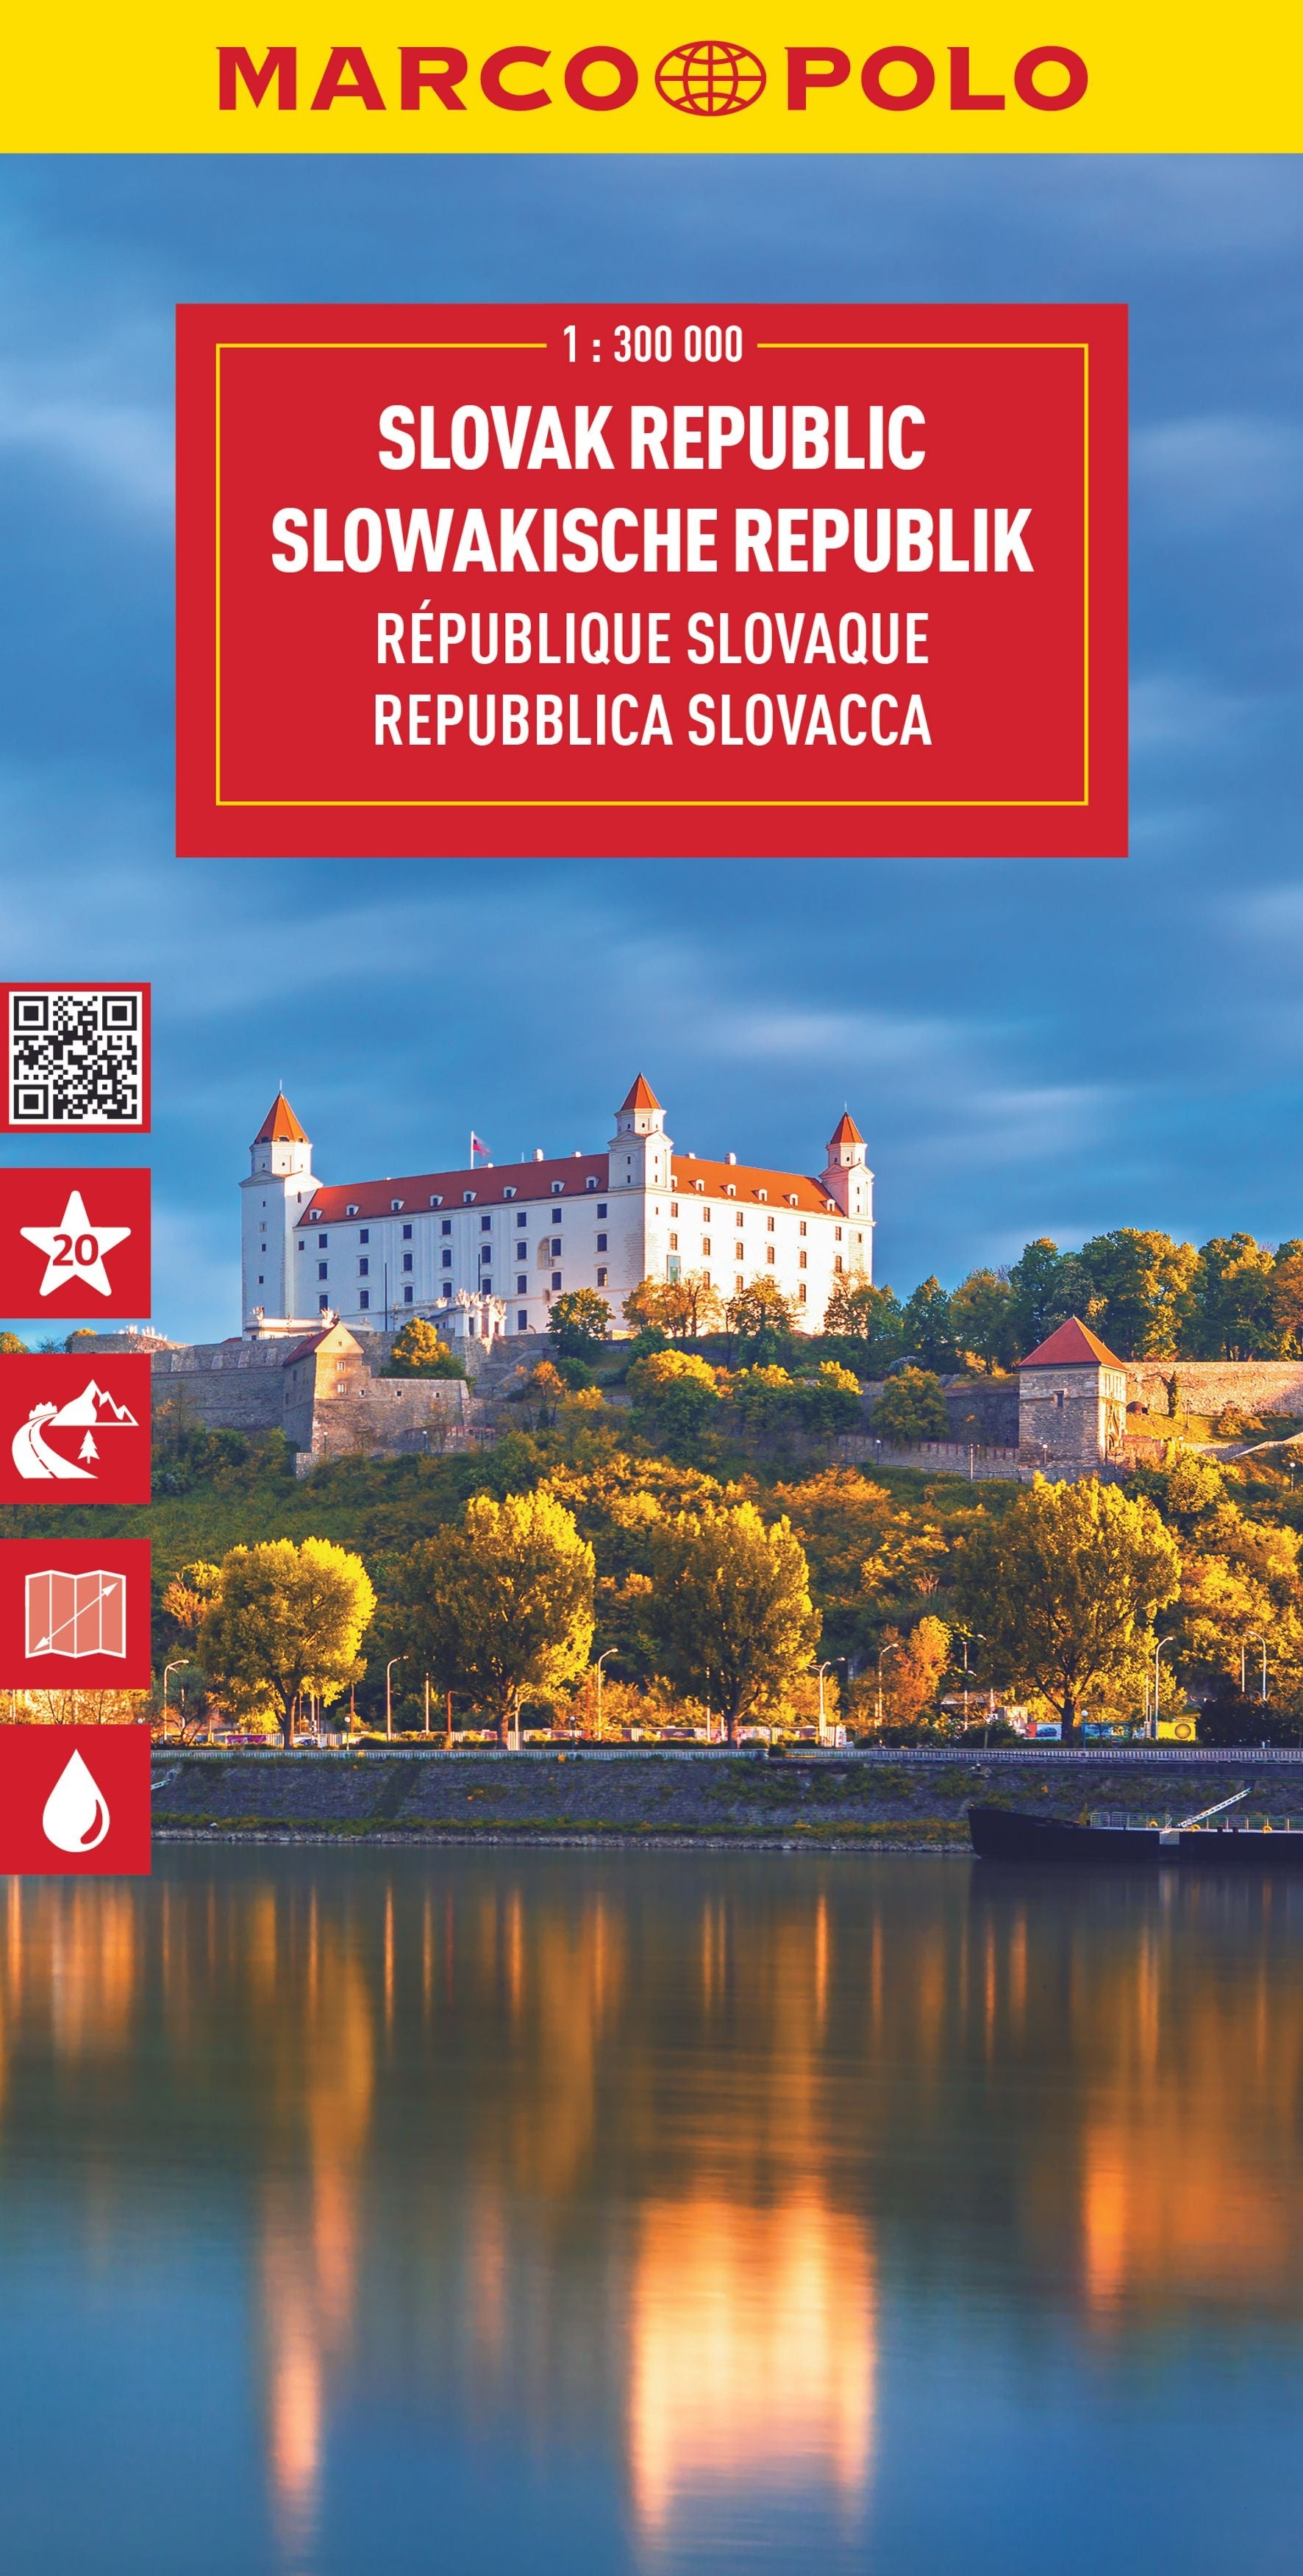 Slowakische Republik 1:300.000 - Marco Polo Länderkarte